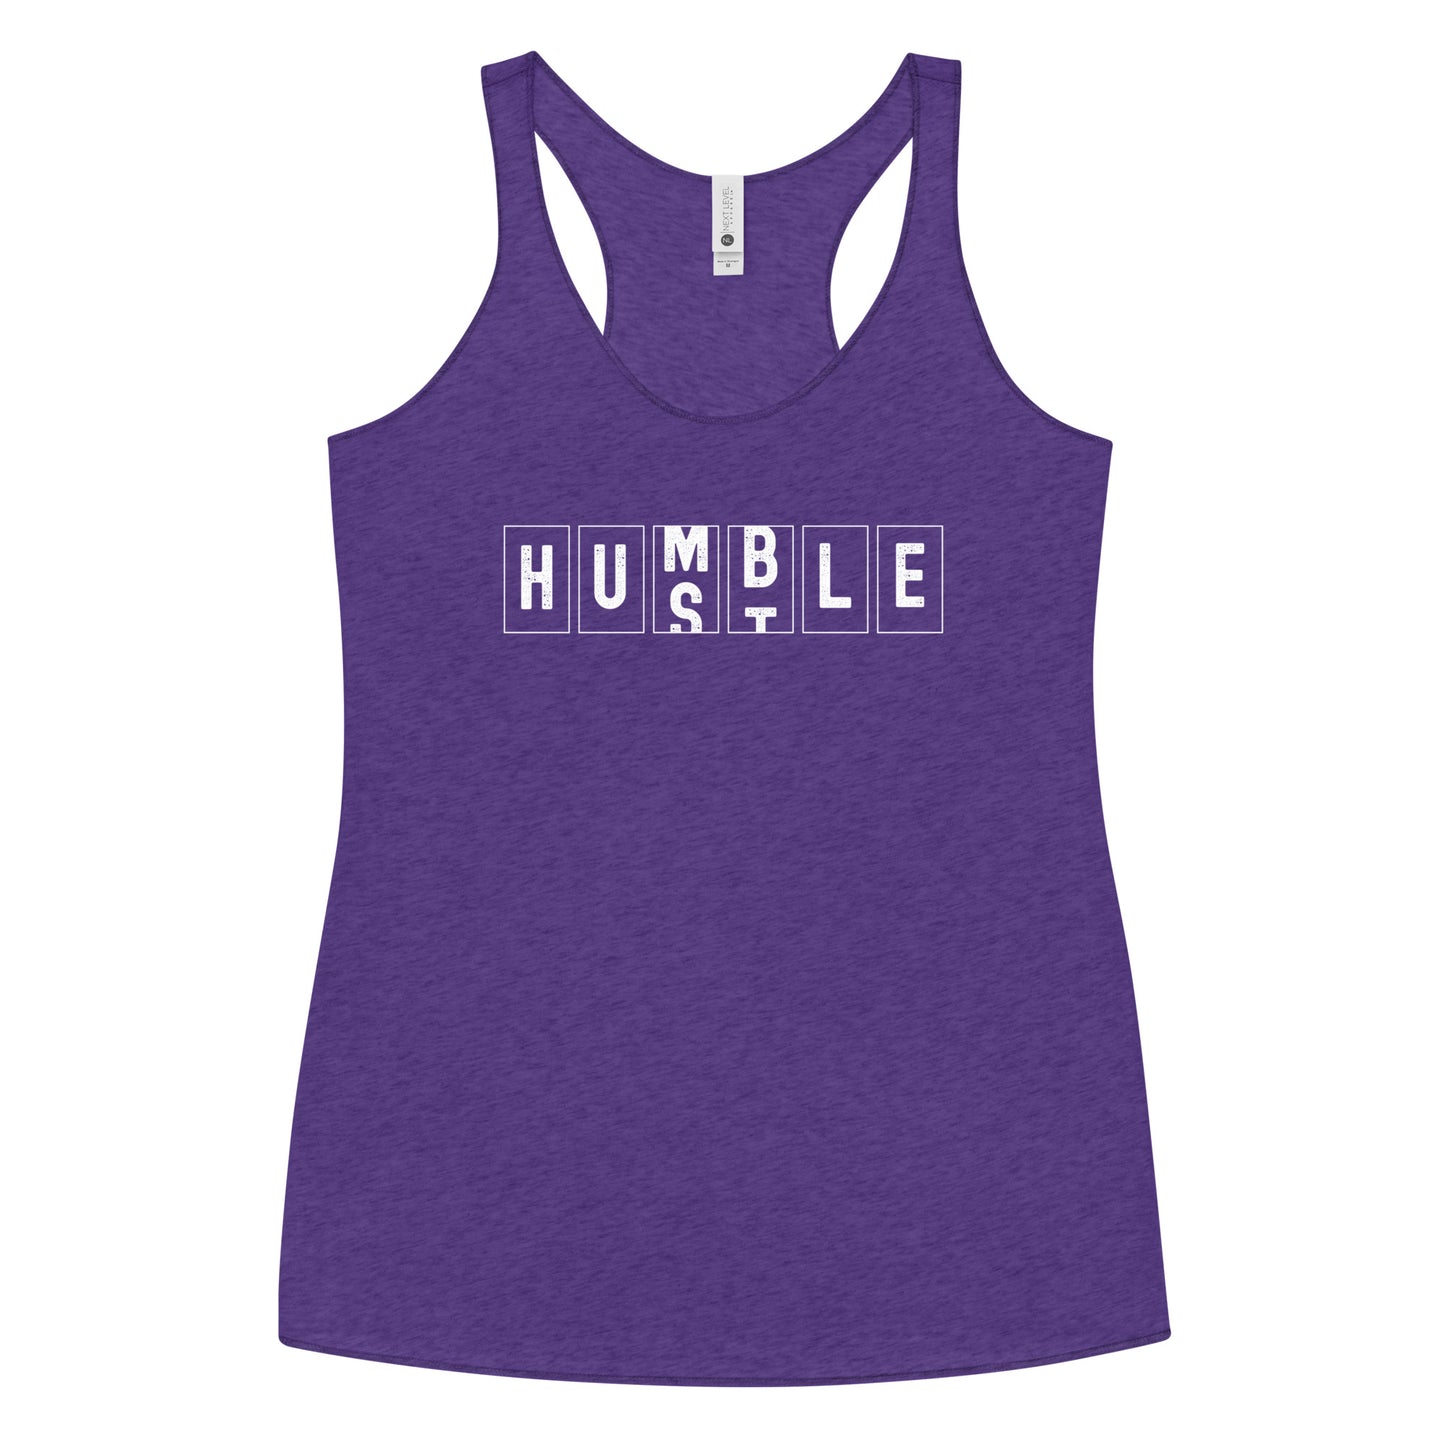 Humble Hustle Women's Tank Top